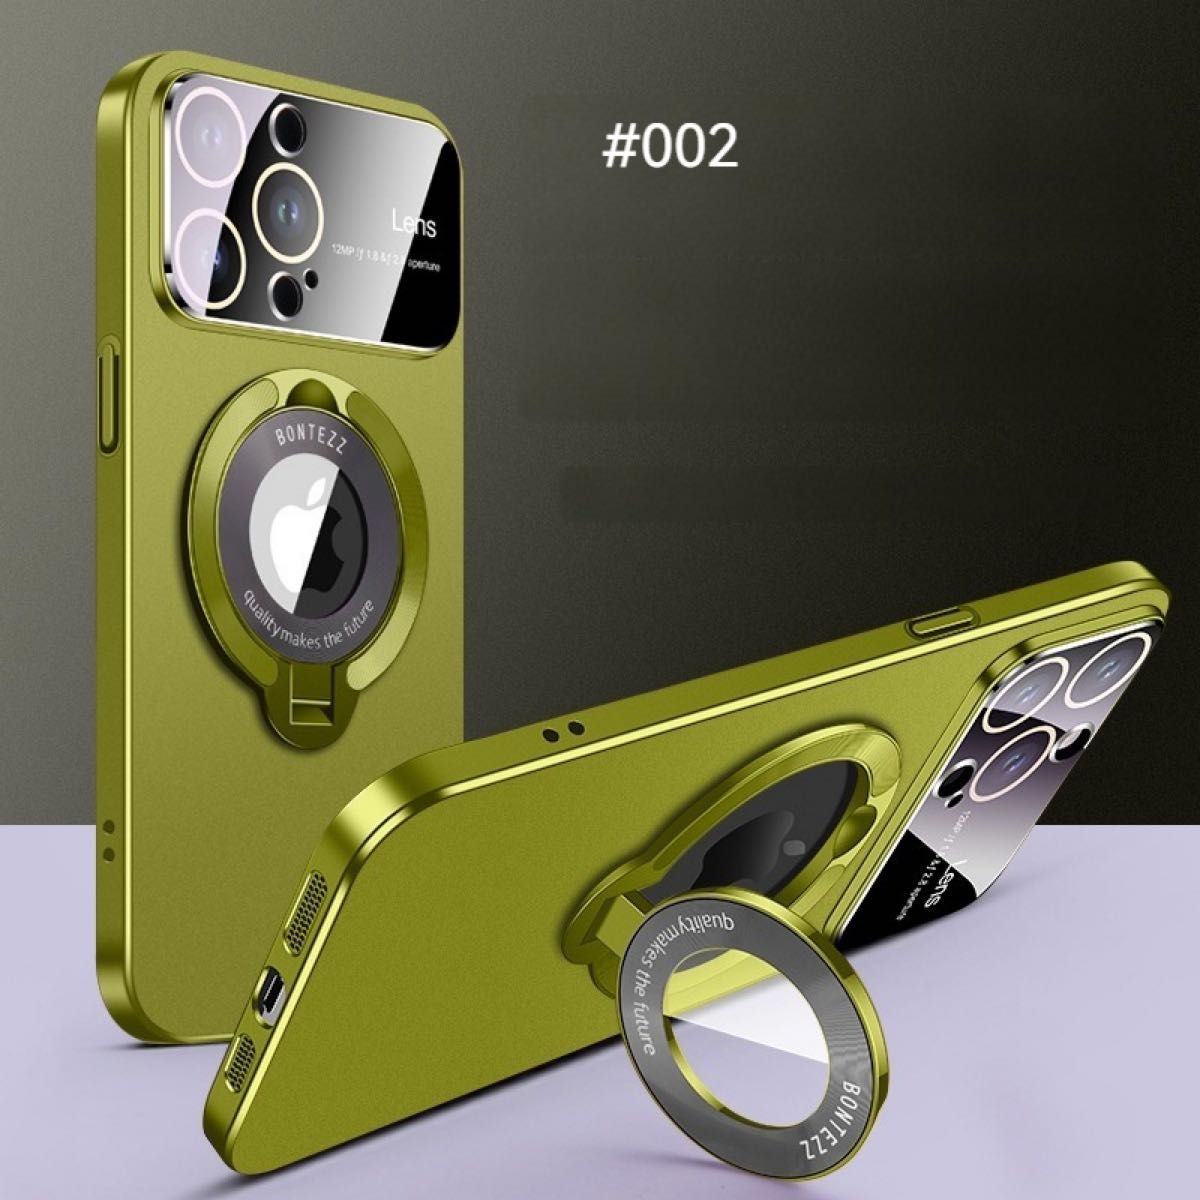 iPhone 15Promaxケース 耐衝撃 カバー スタンド機能 Magsafe 15Pro 韓国 レンズ保護 おしゃれ 軽量